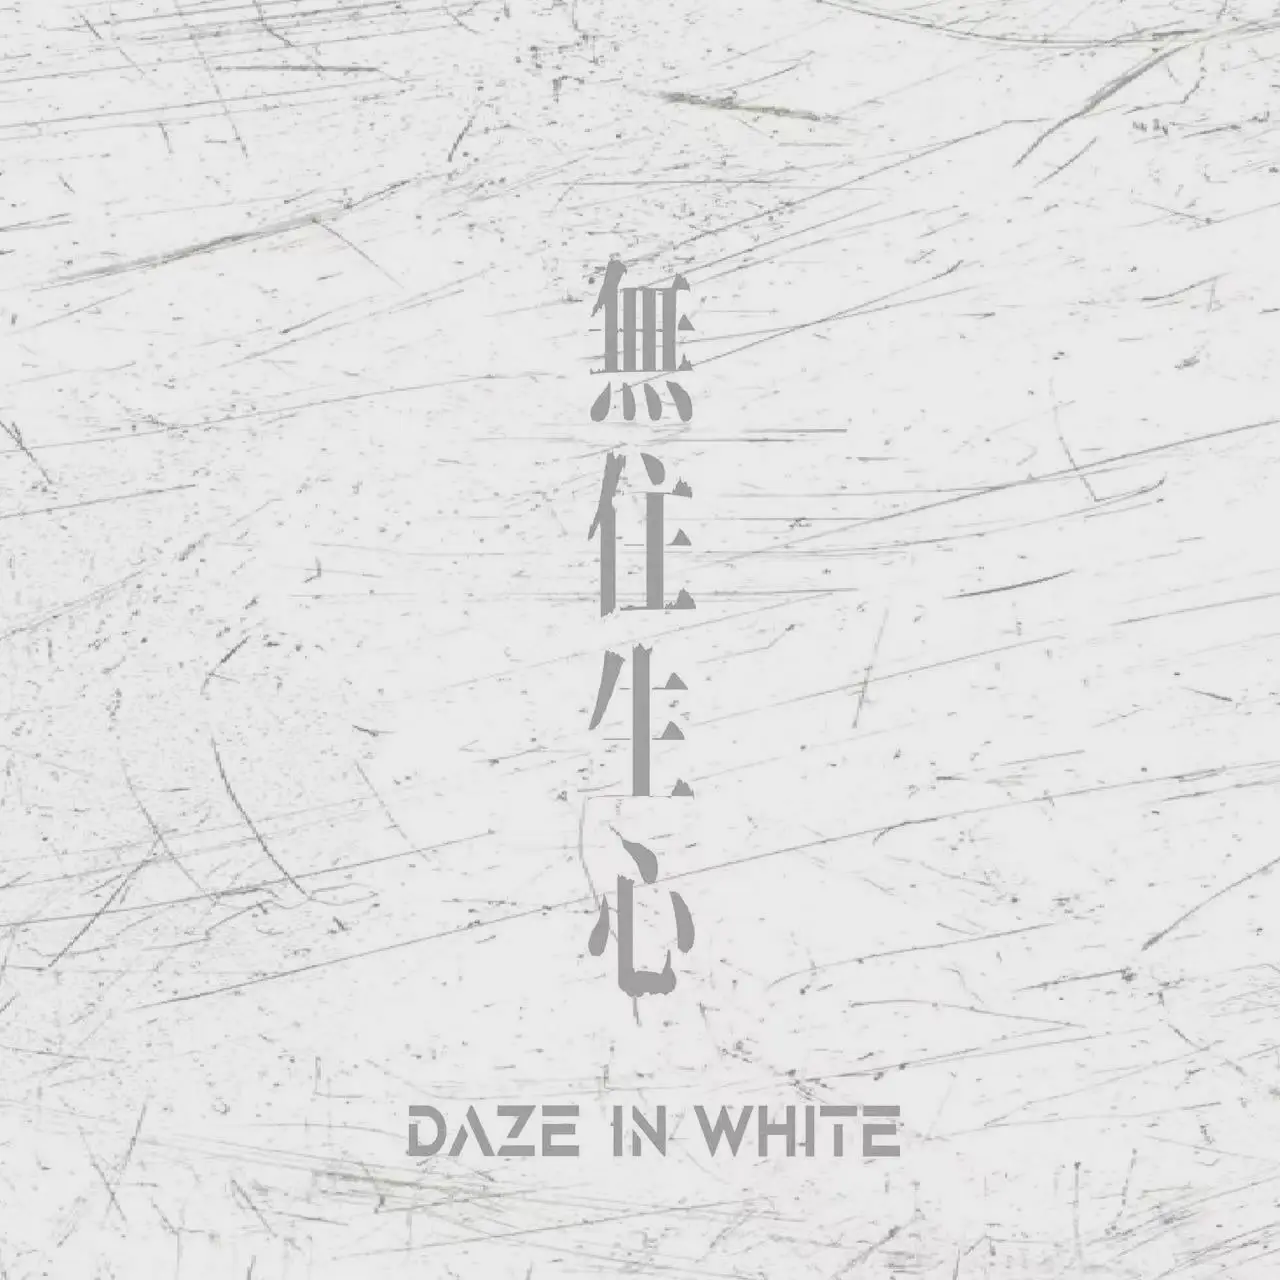 Daze in White他们23年专辑的《无住生心》